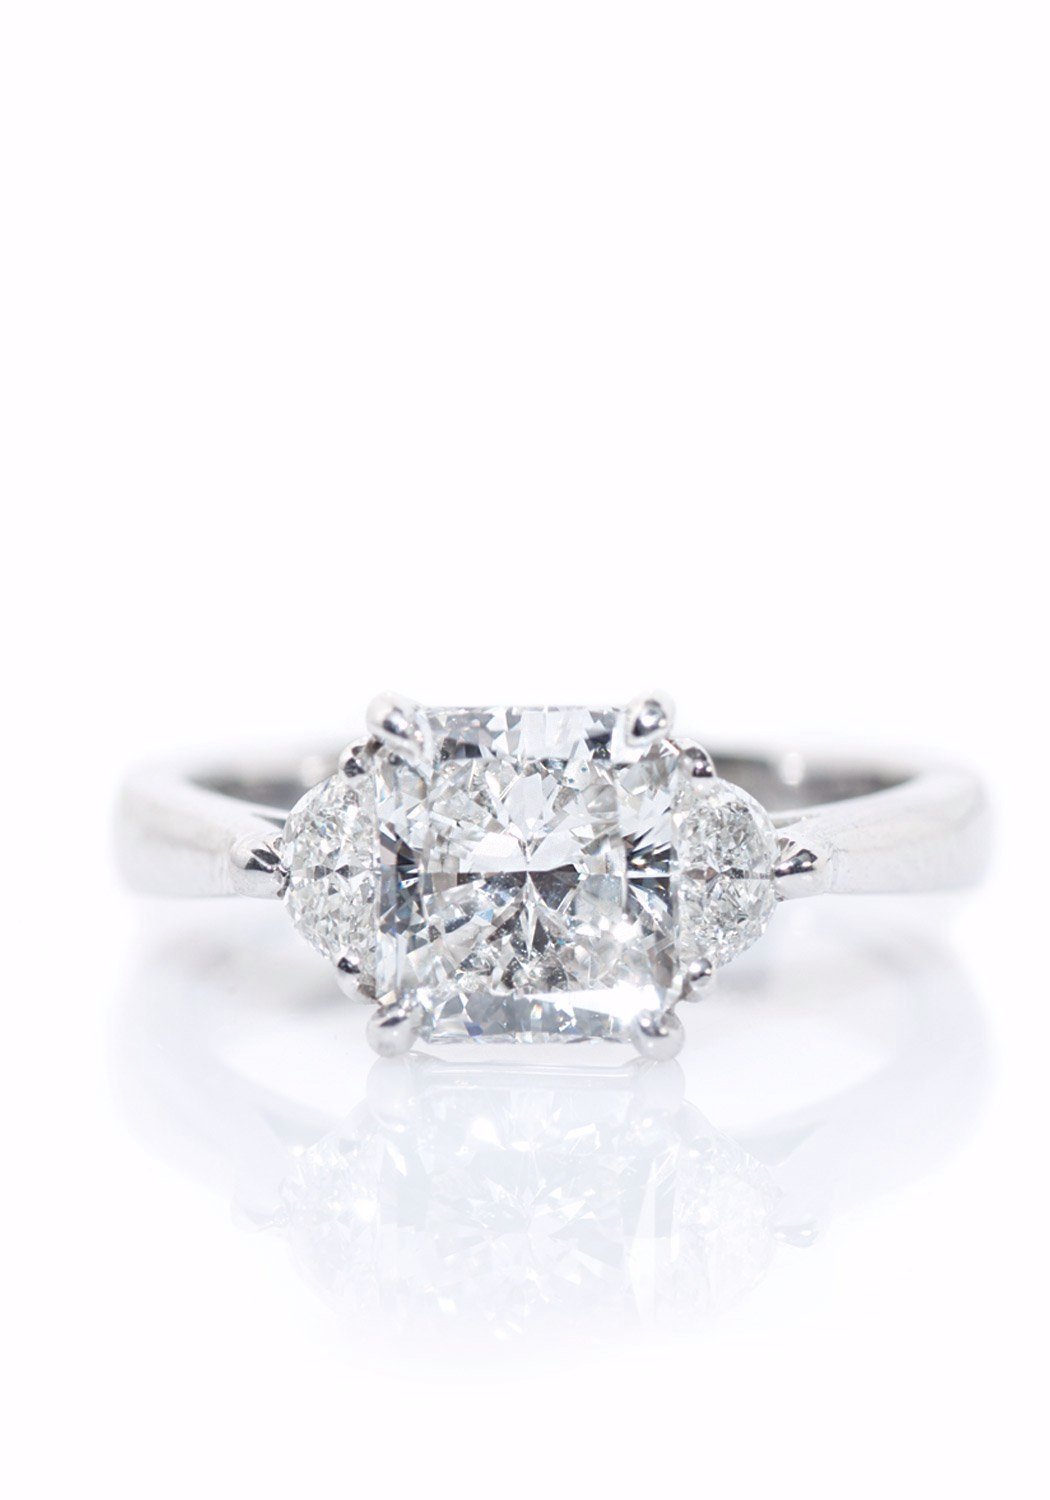 Starburst Diamond Ring | Oster Jewelers 